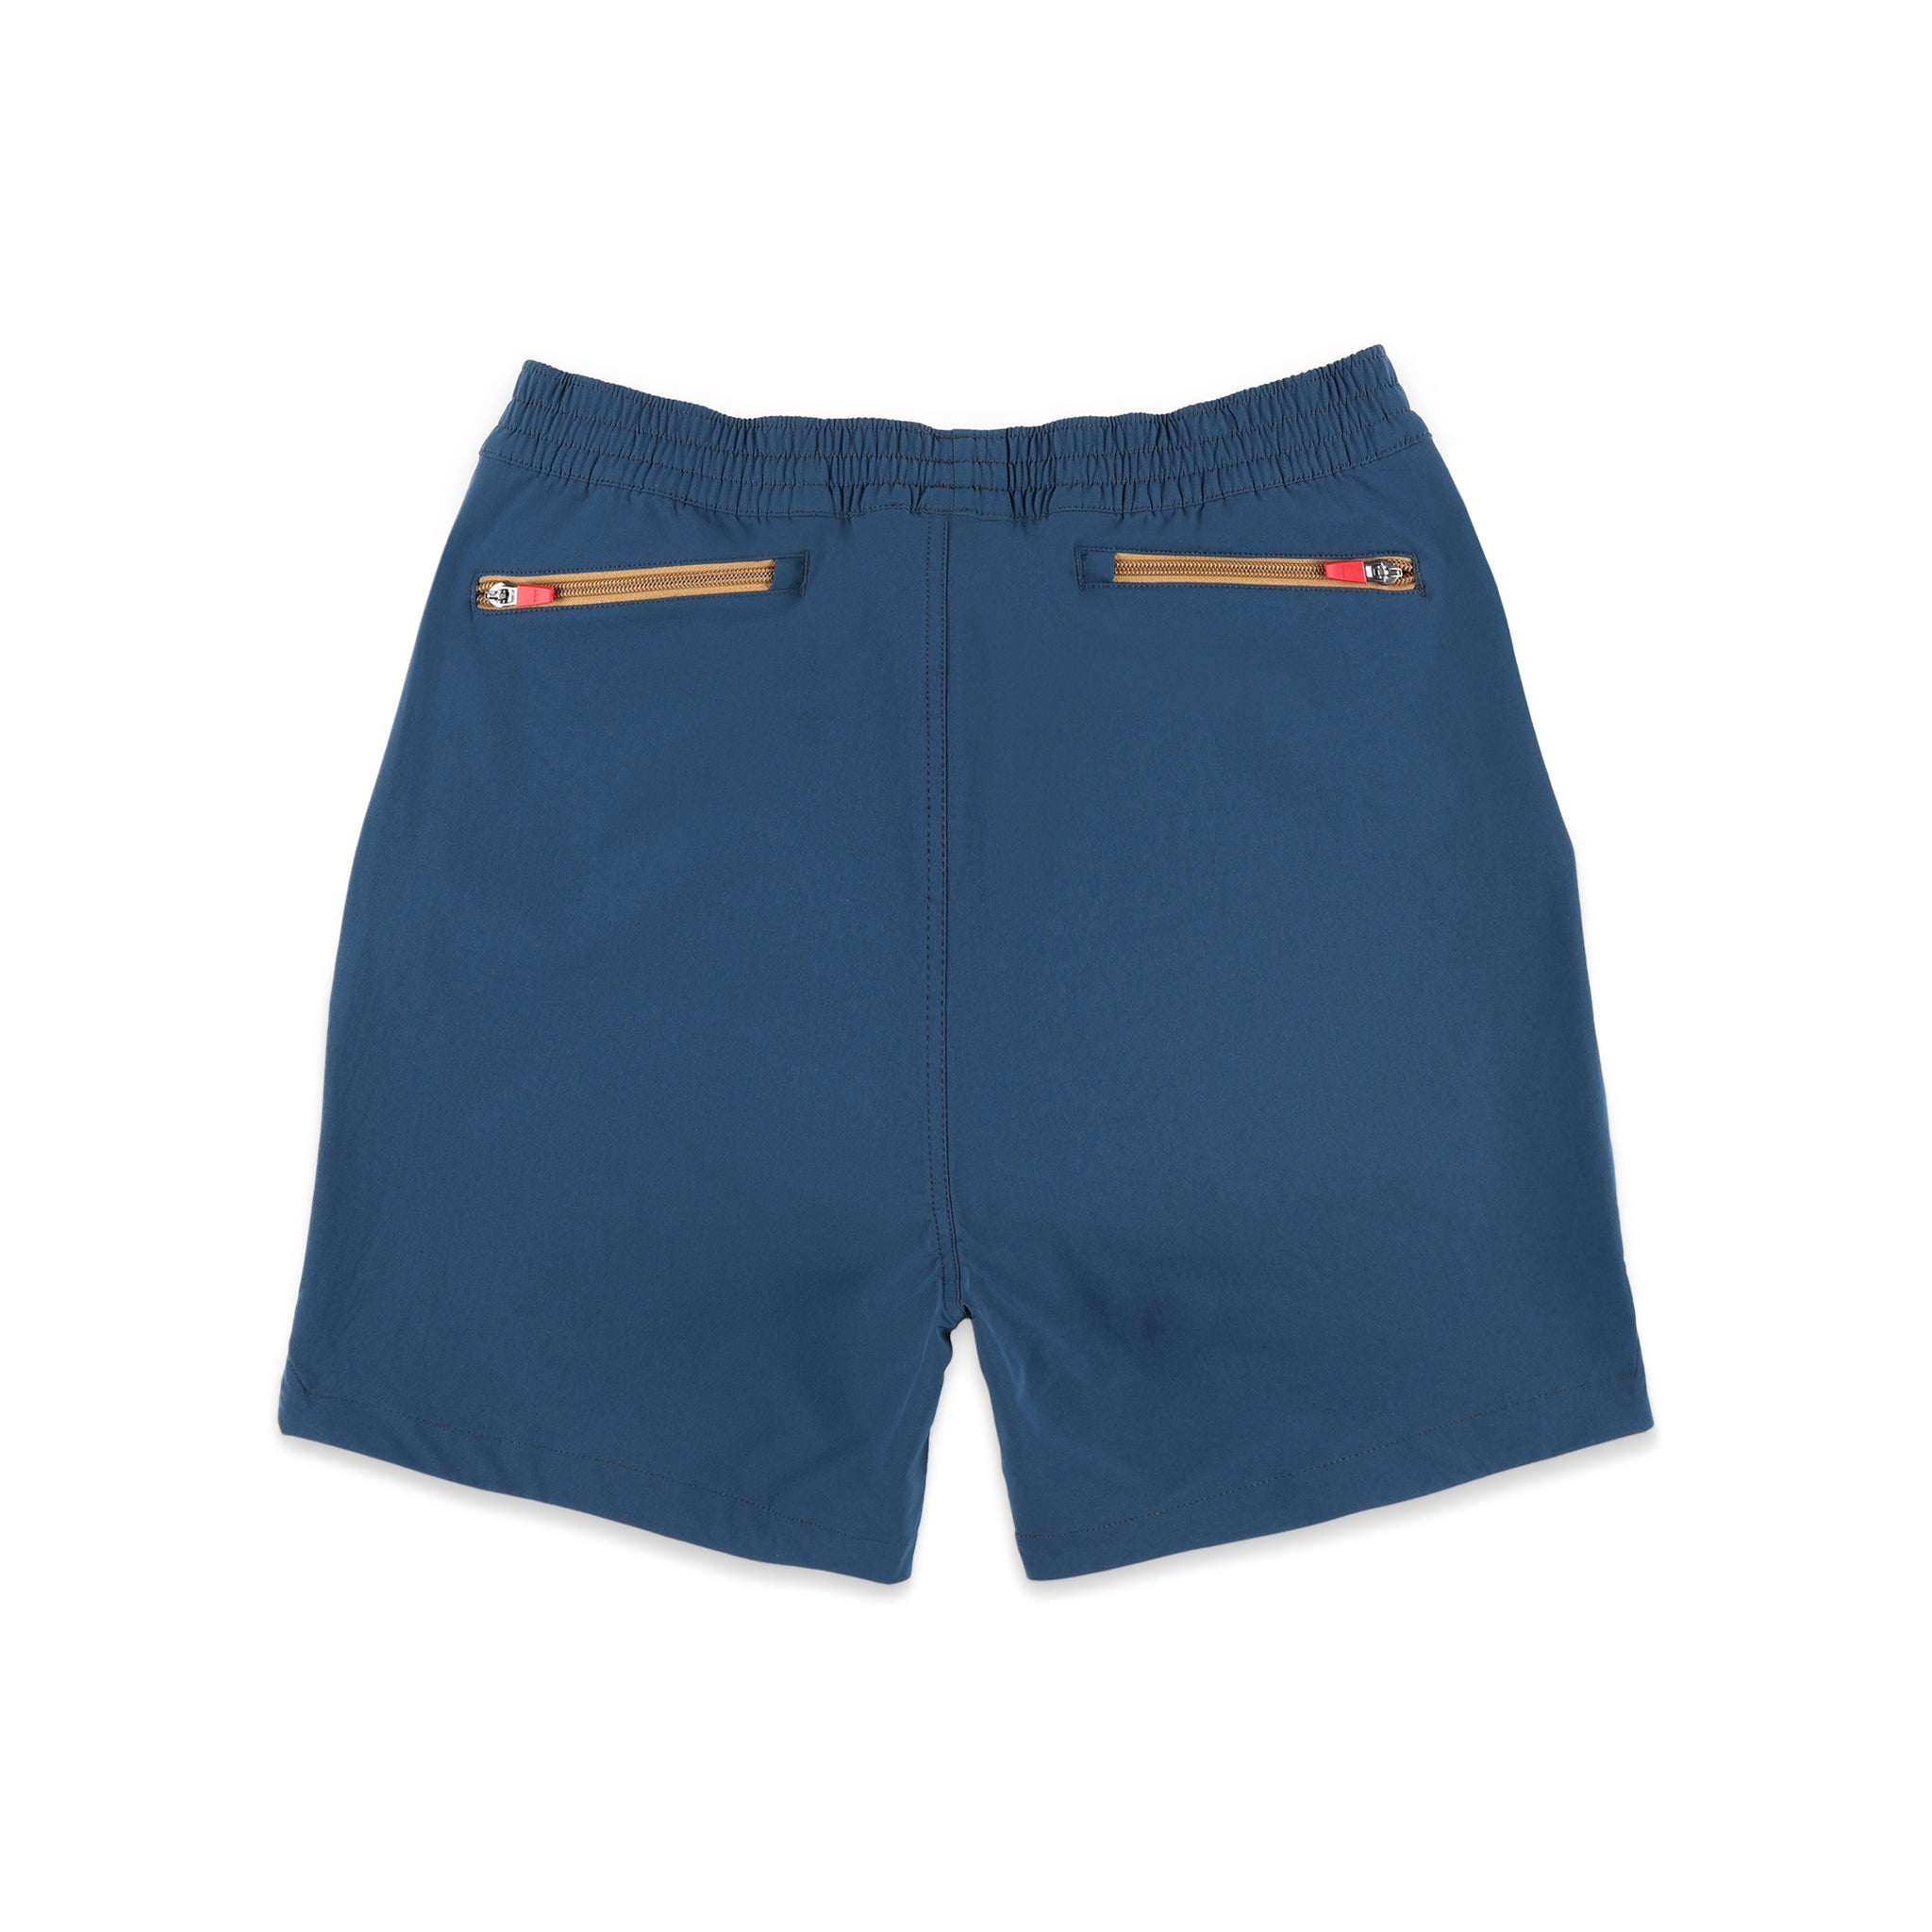 Back zipper pockets on Topo Designs Men's Global lightweight quick dry travel Shorts in "Pond Blue".